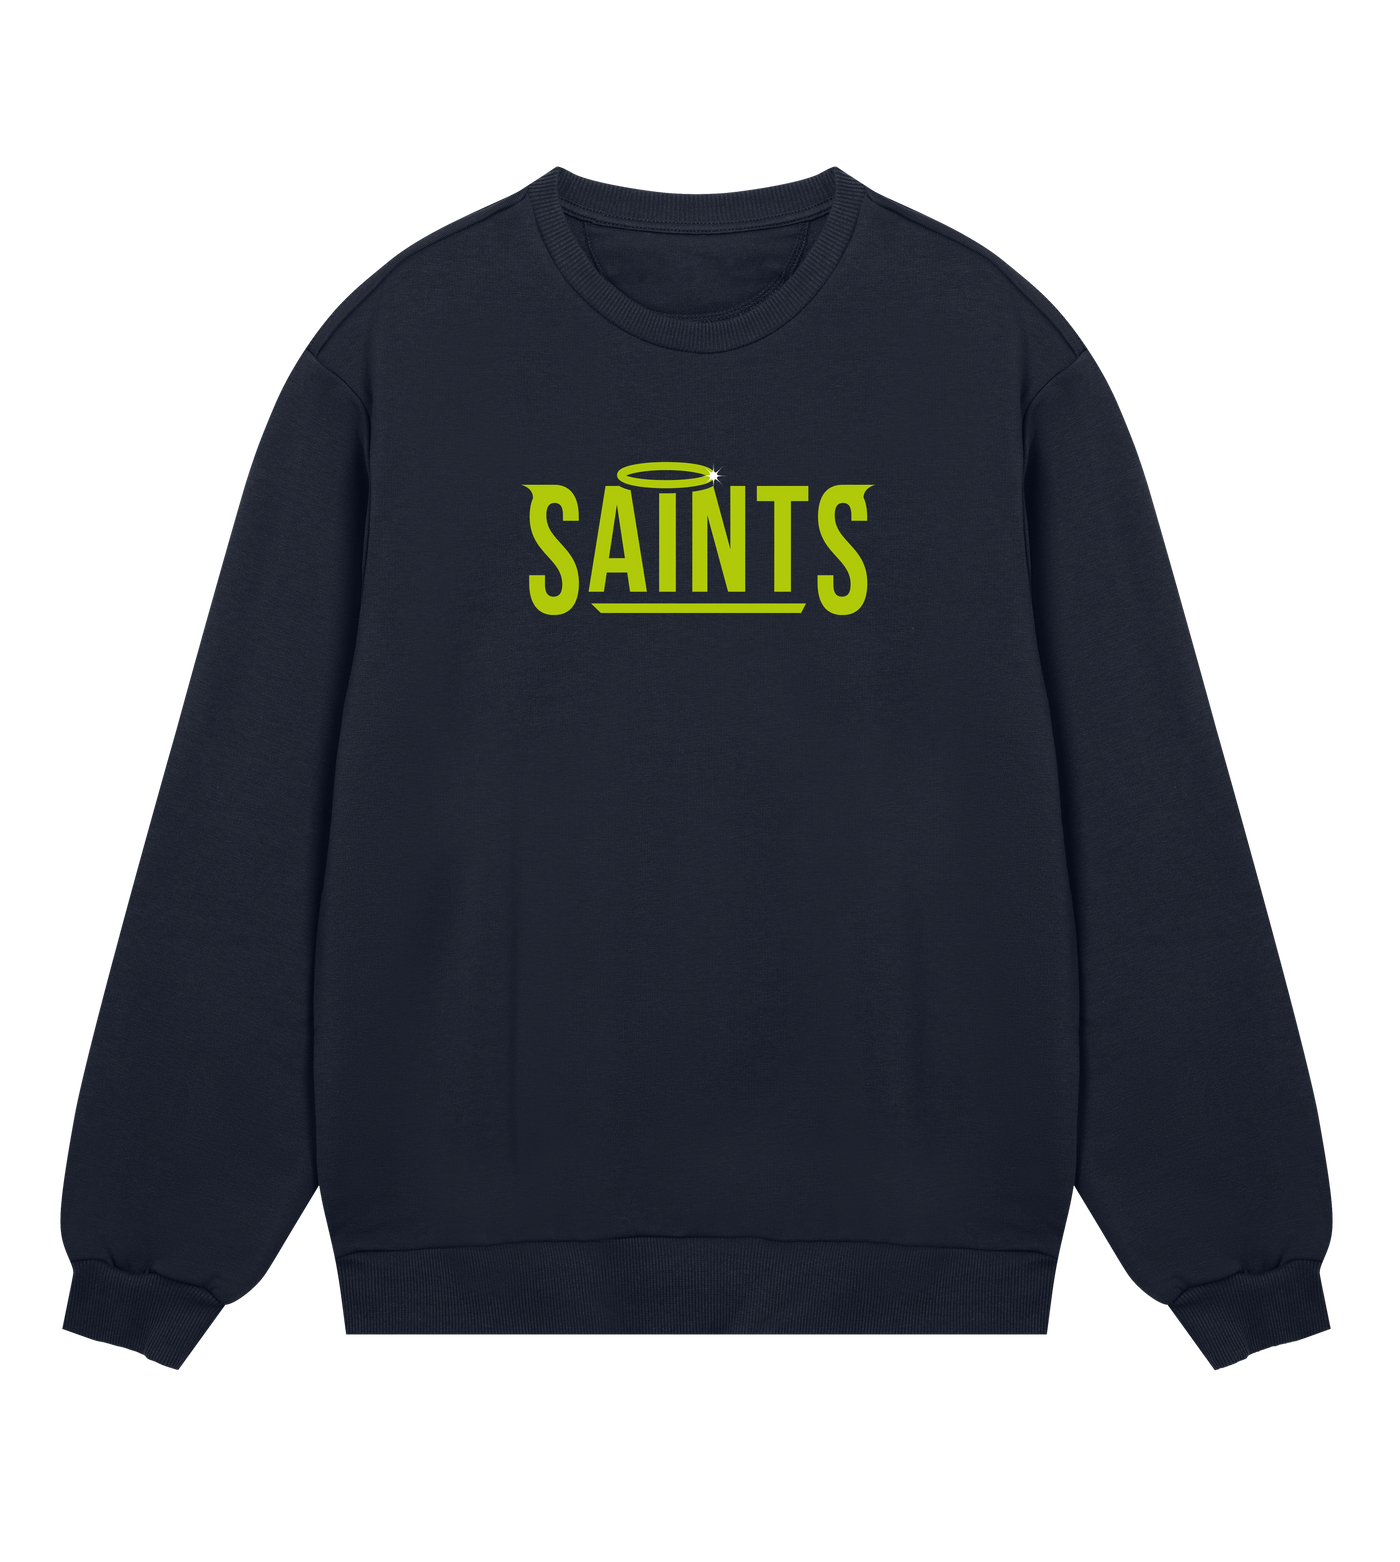 Nässjö Saints Sweatshirt - Premium sweatshirt from Creator Studio - Shop now at Reyrr Athletics